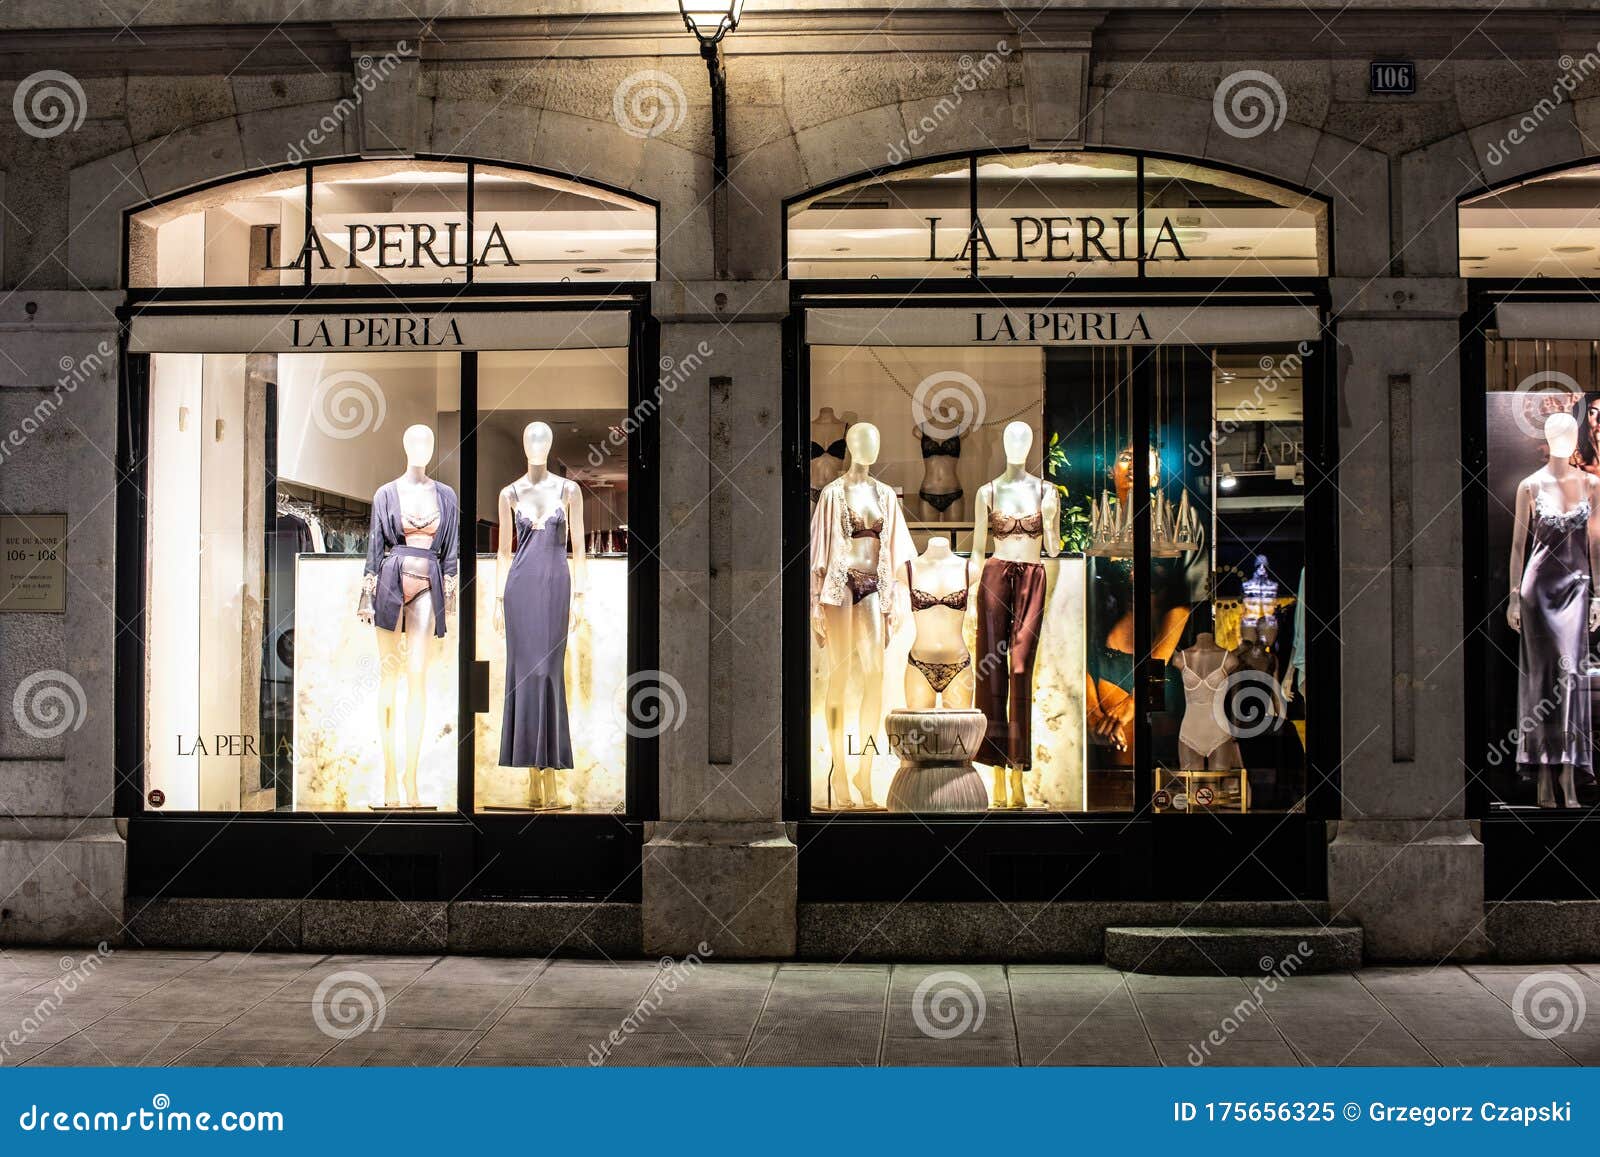 La Perla Lingerie Fashion Store, Window Shop, Clothes, Underwear, Sleepwear on Display Sale, La Perla Lingerie Fashion House Editorial Image Image of corsetry, brand: 175656325